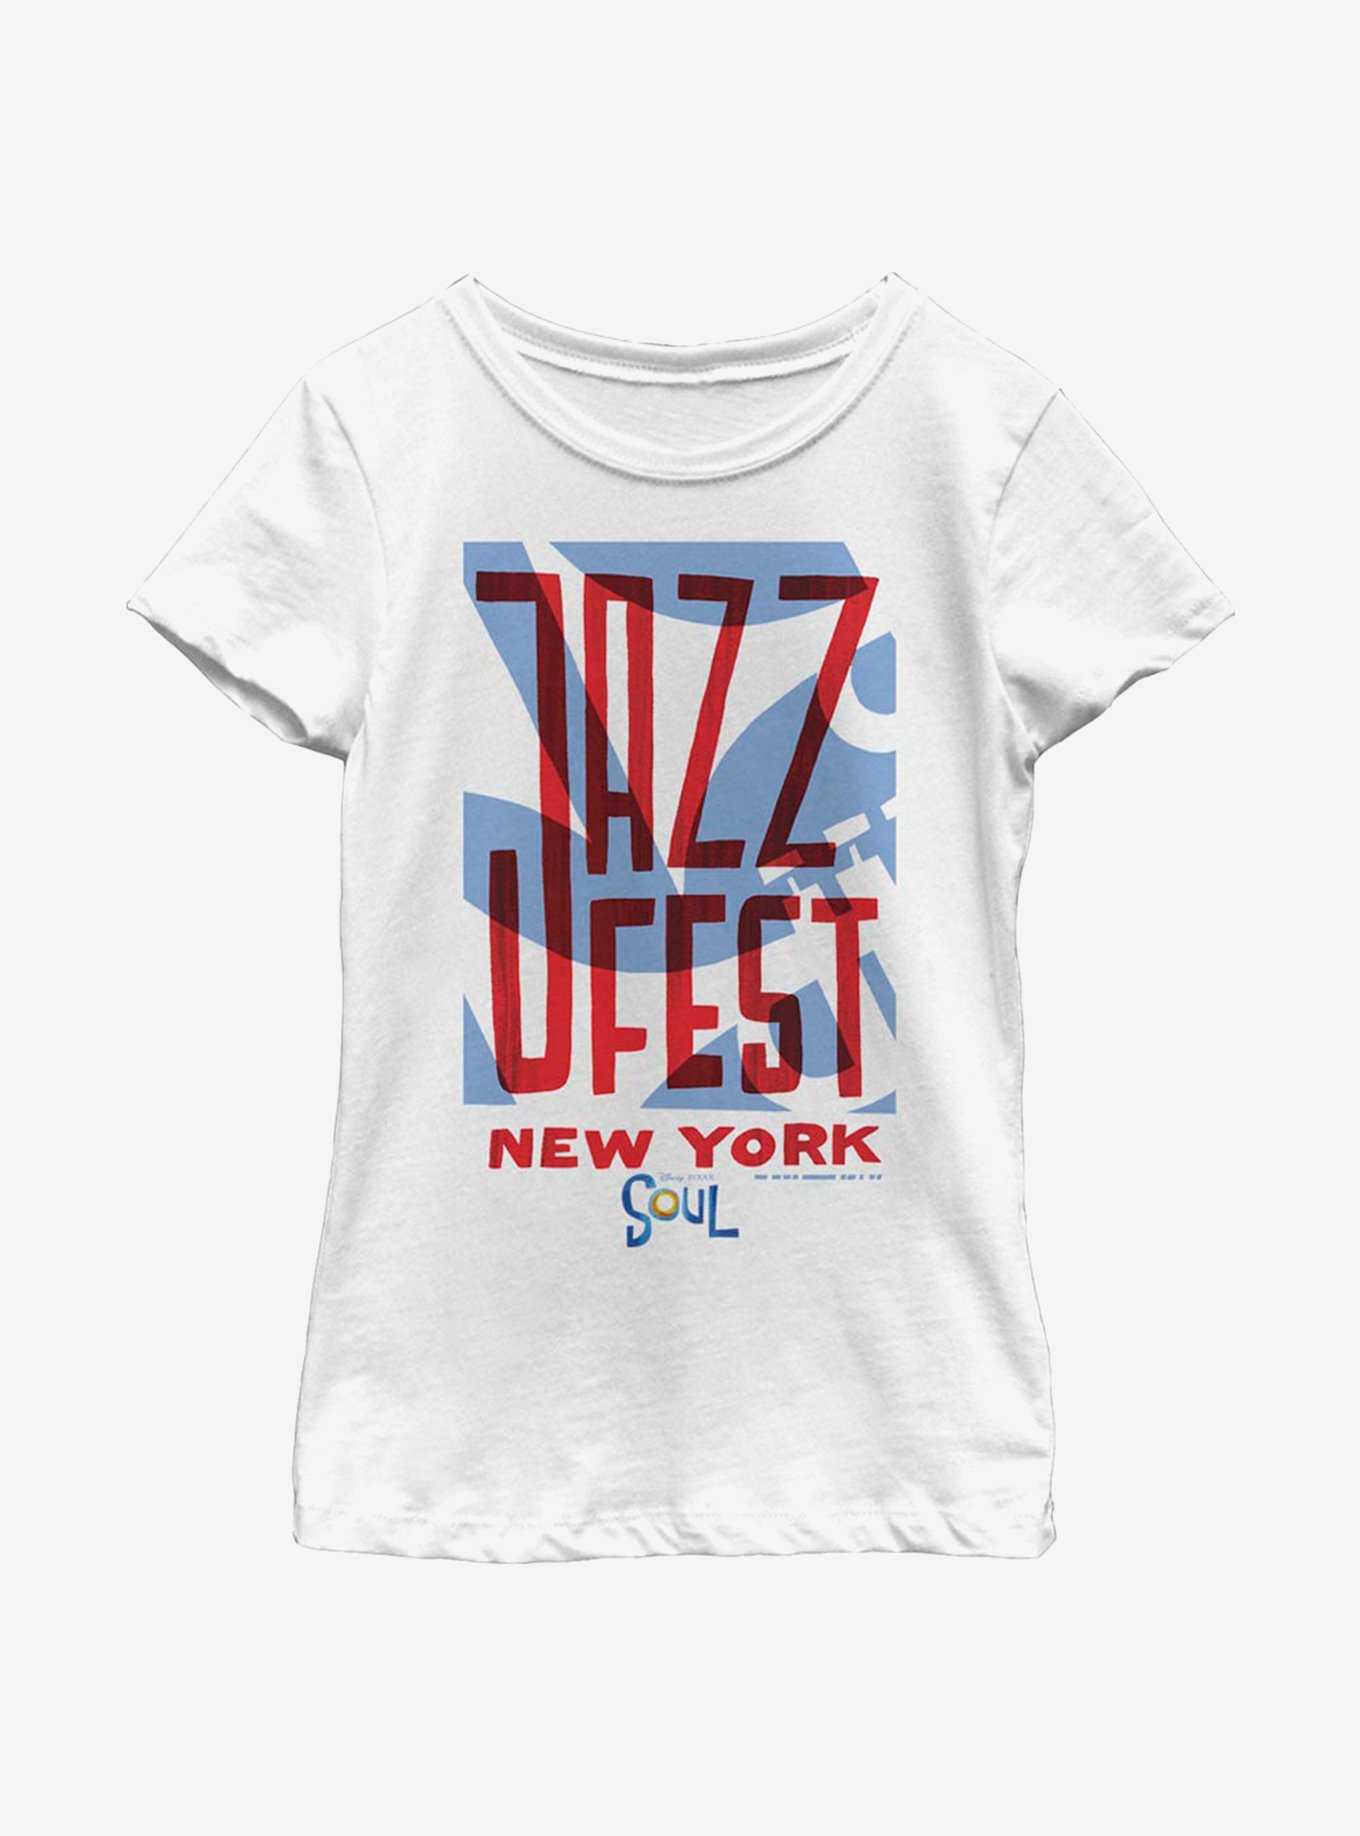 Disney Pixar Soul Jazz Fest Youth Girls T-Shirt, , hi-res